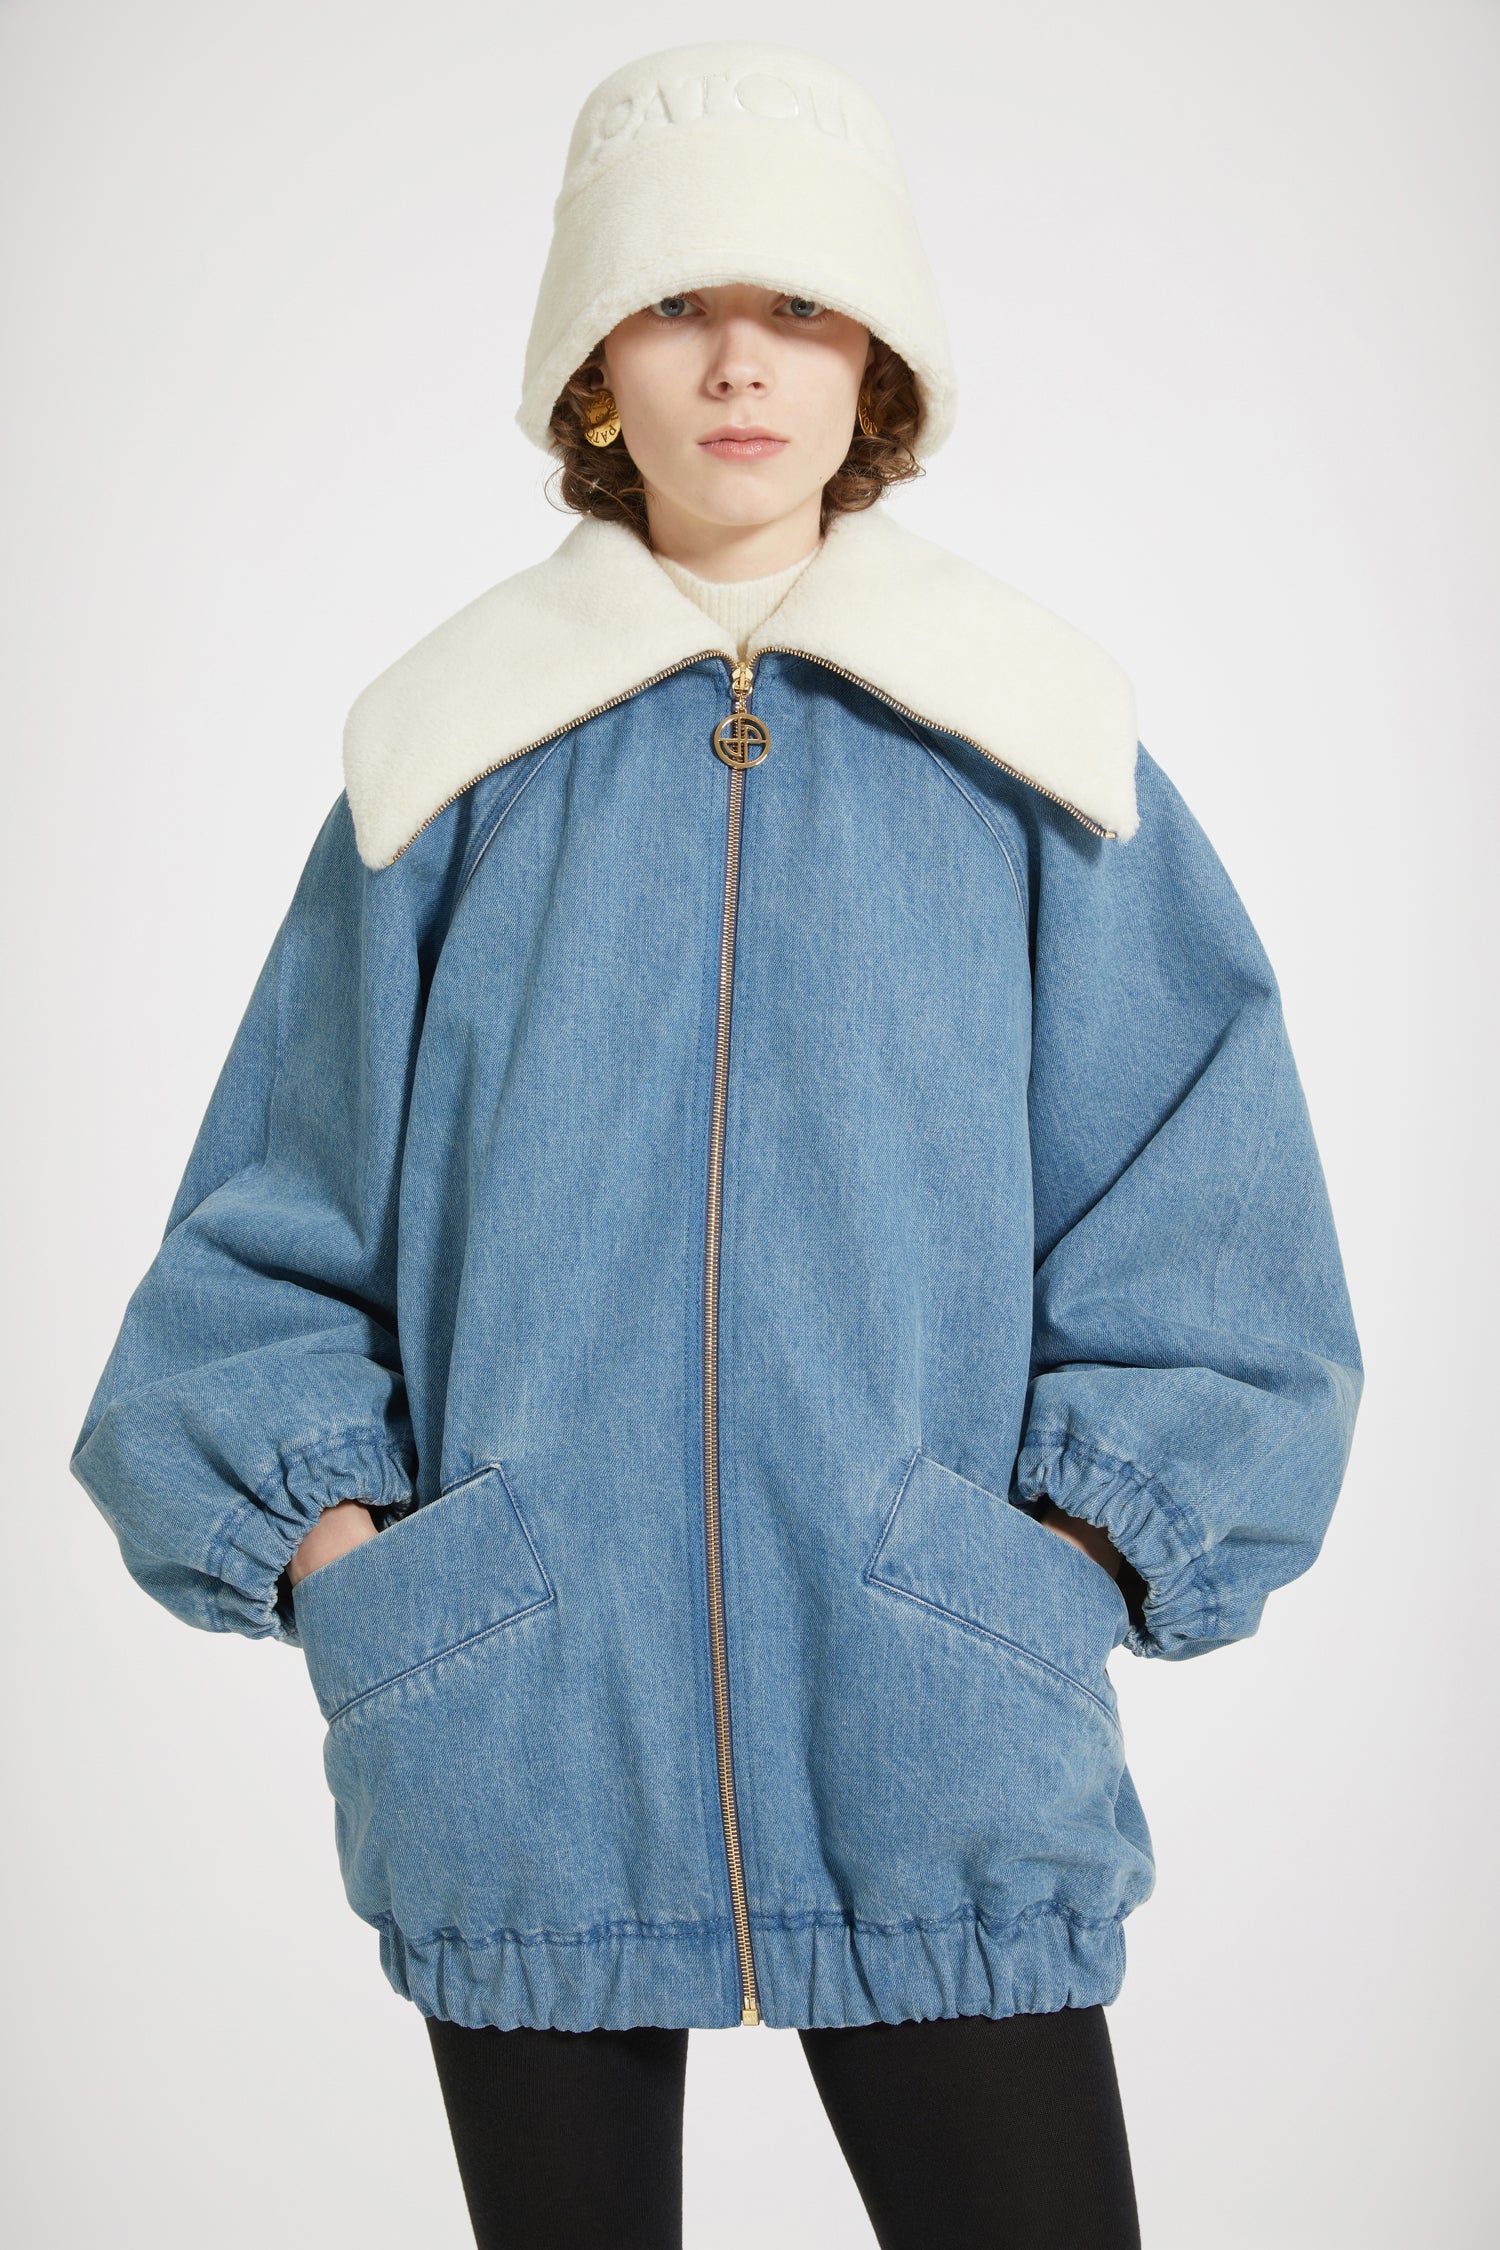 LEVI'S® Premium Quality Clothing 16365 Big E Type 3 Sherpa Fleece Lined  Blue Denim Standard Trucker Jean Jacket, Size L - Etsy